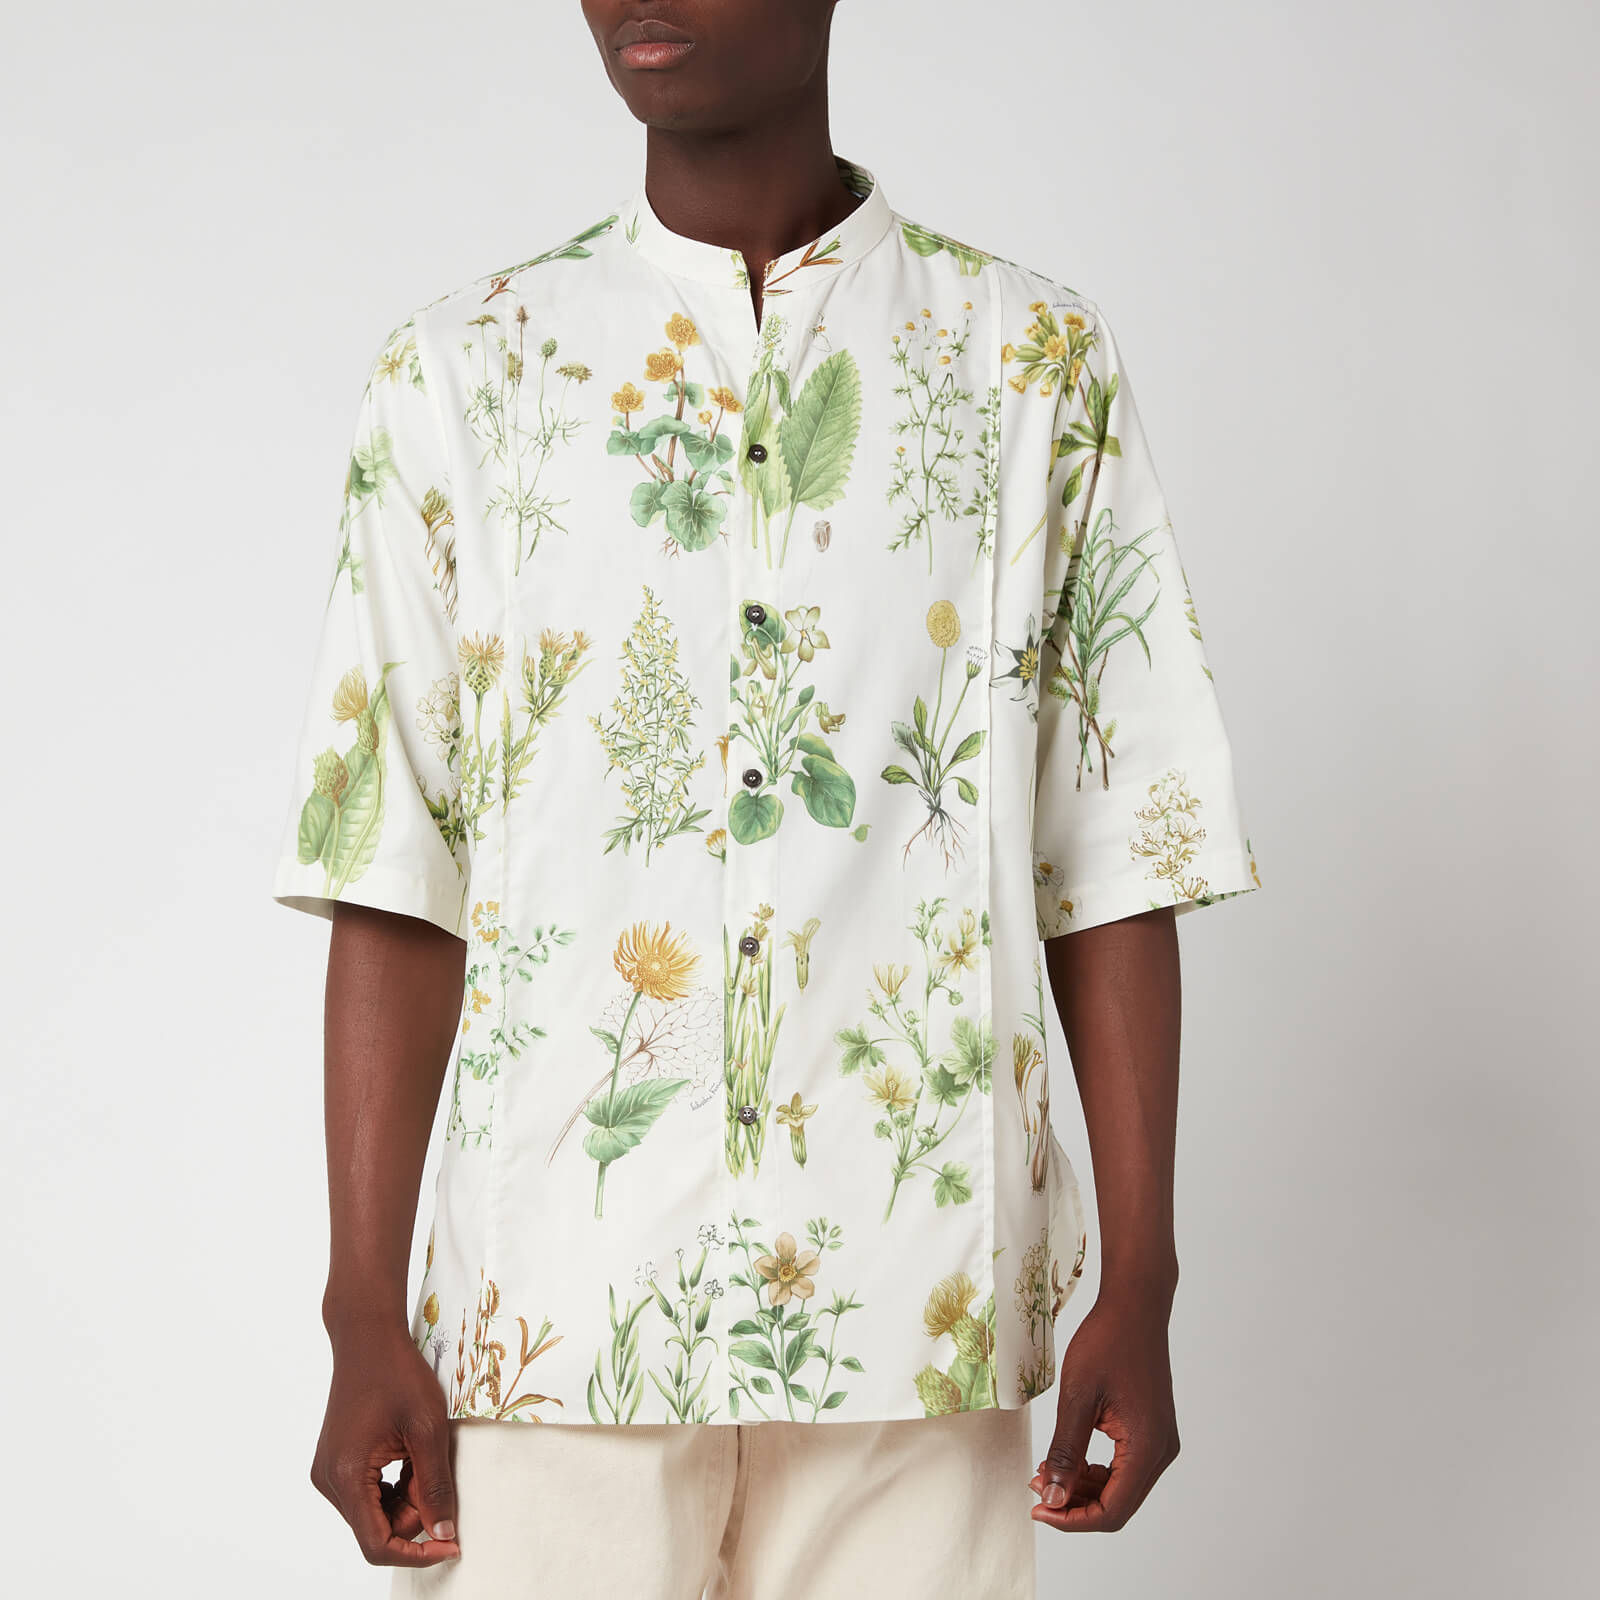 Salvatore Ferragamo Men's Short Sleeve Print Shirt - Green - S